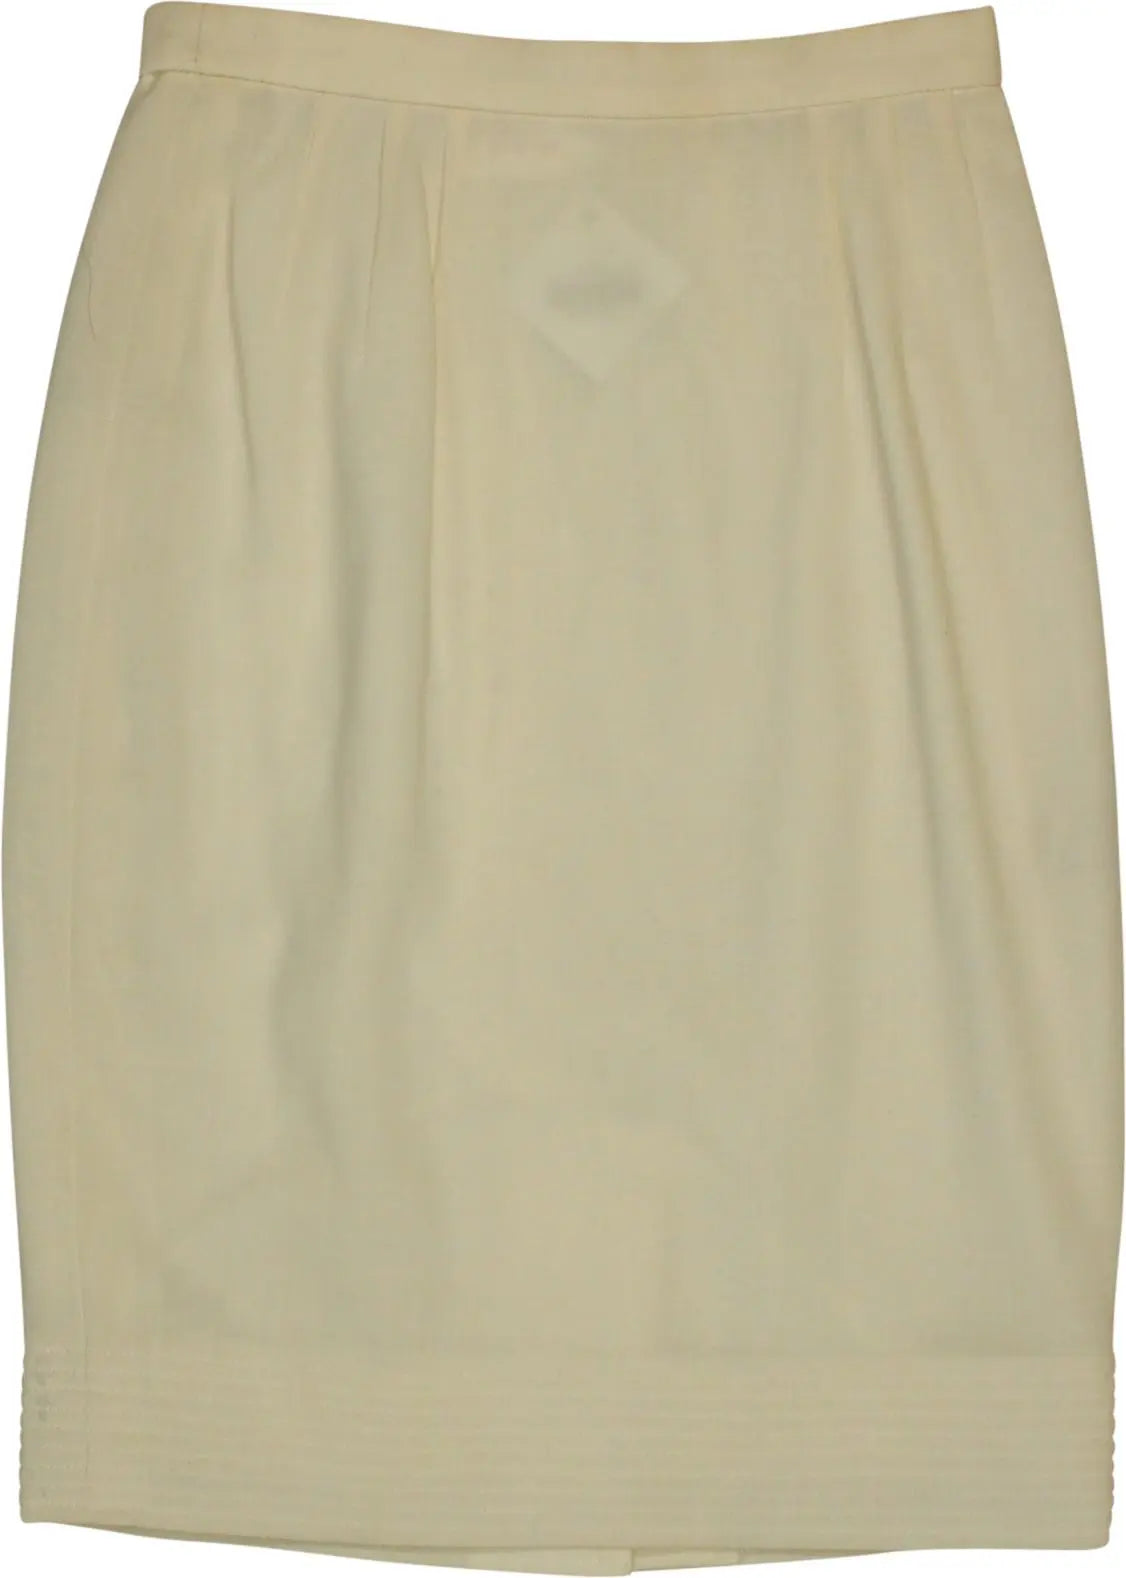 Marlis von Plotho - Midi Pencil Skirt- ThriftTale.com - Vintage and second handclothing